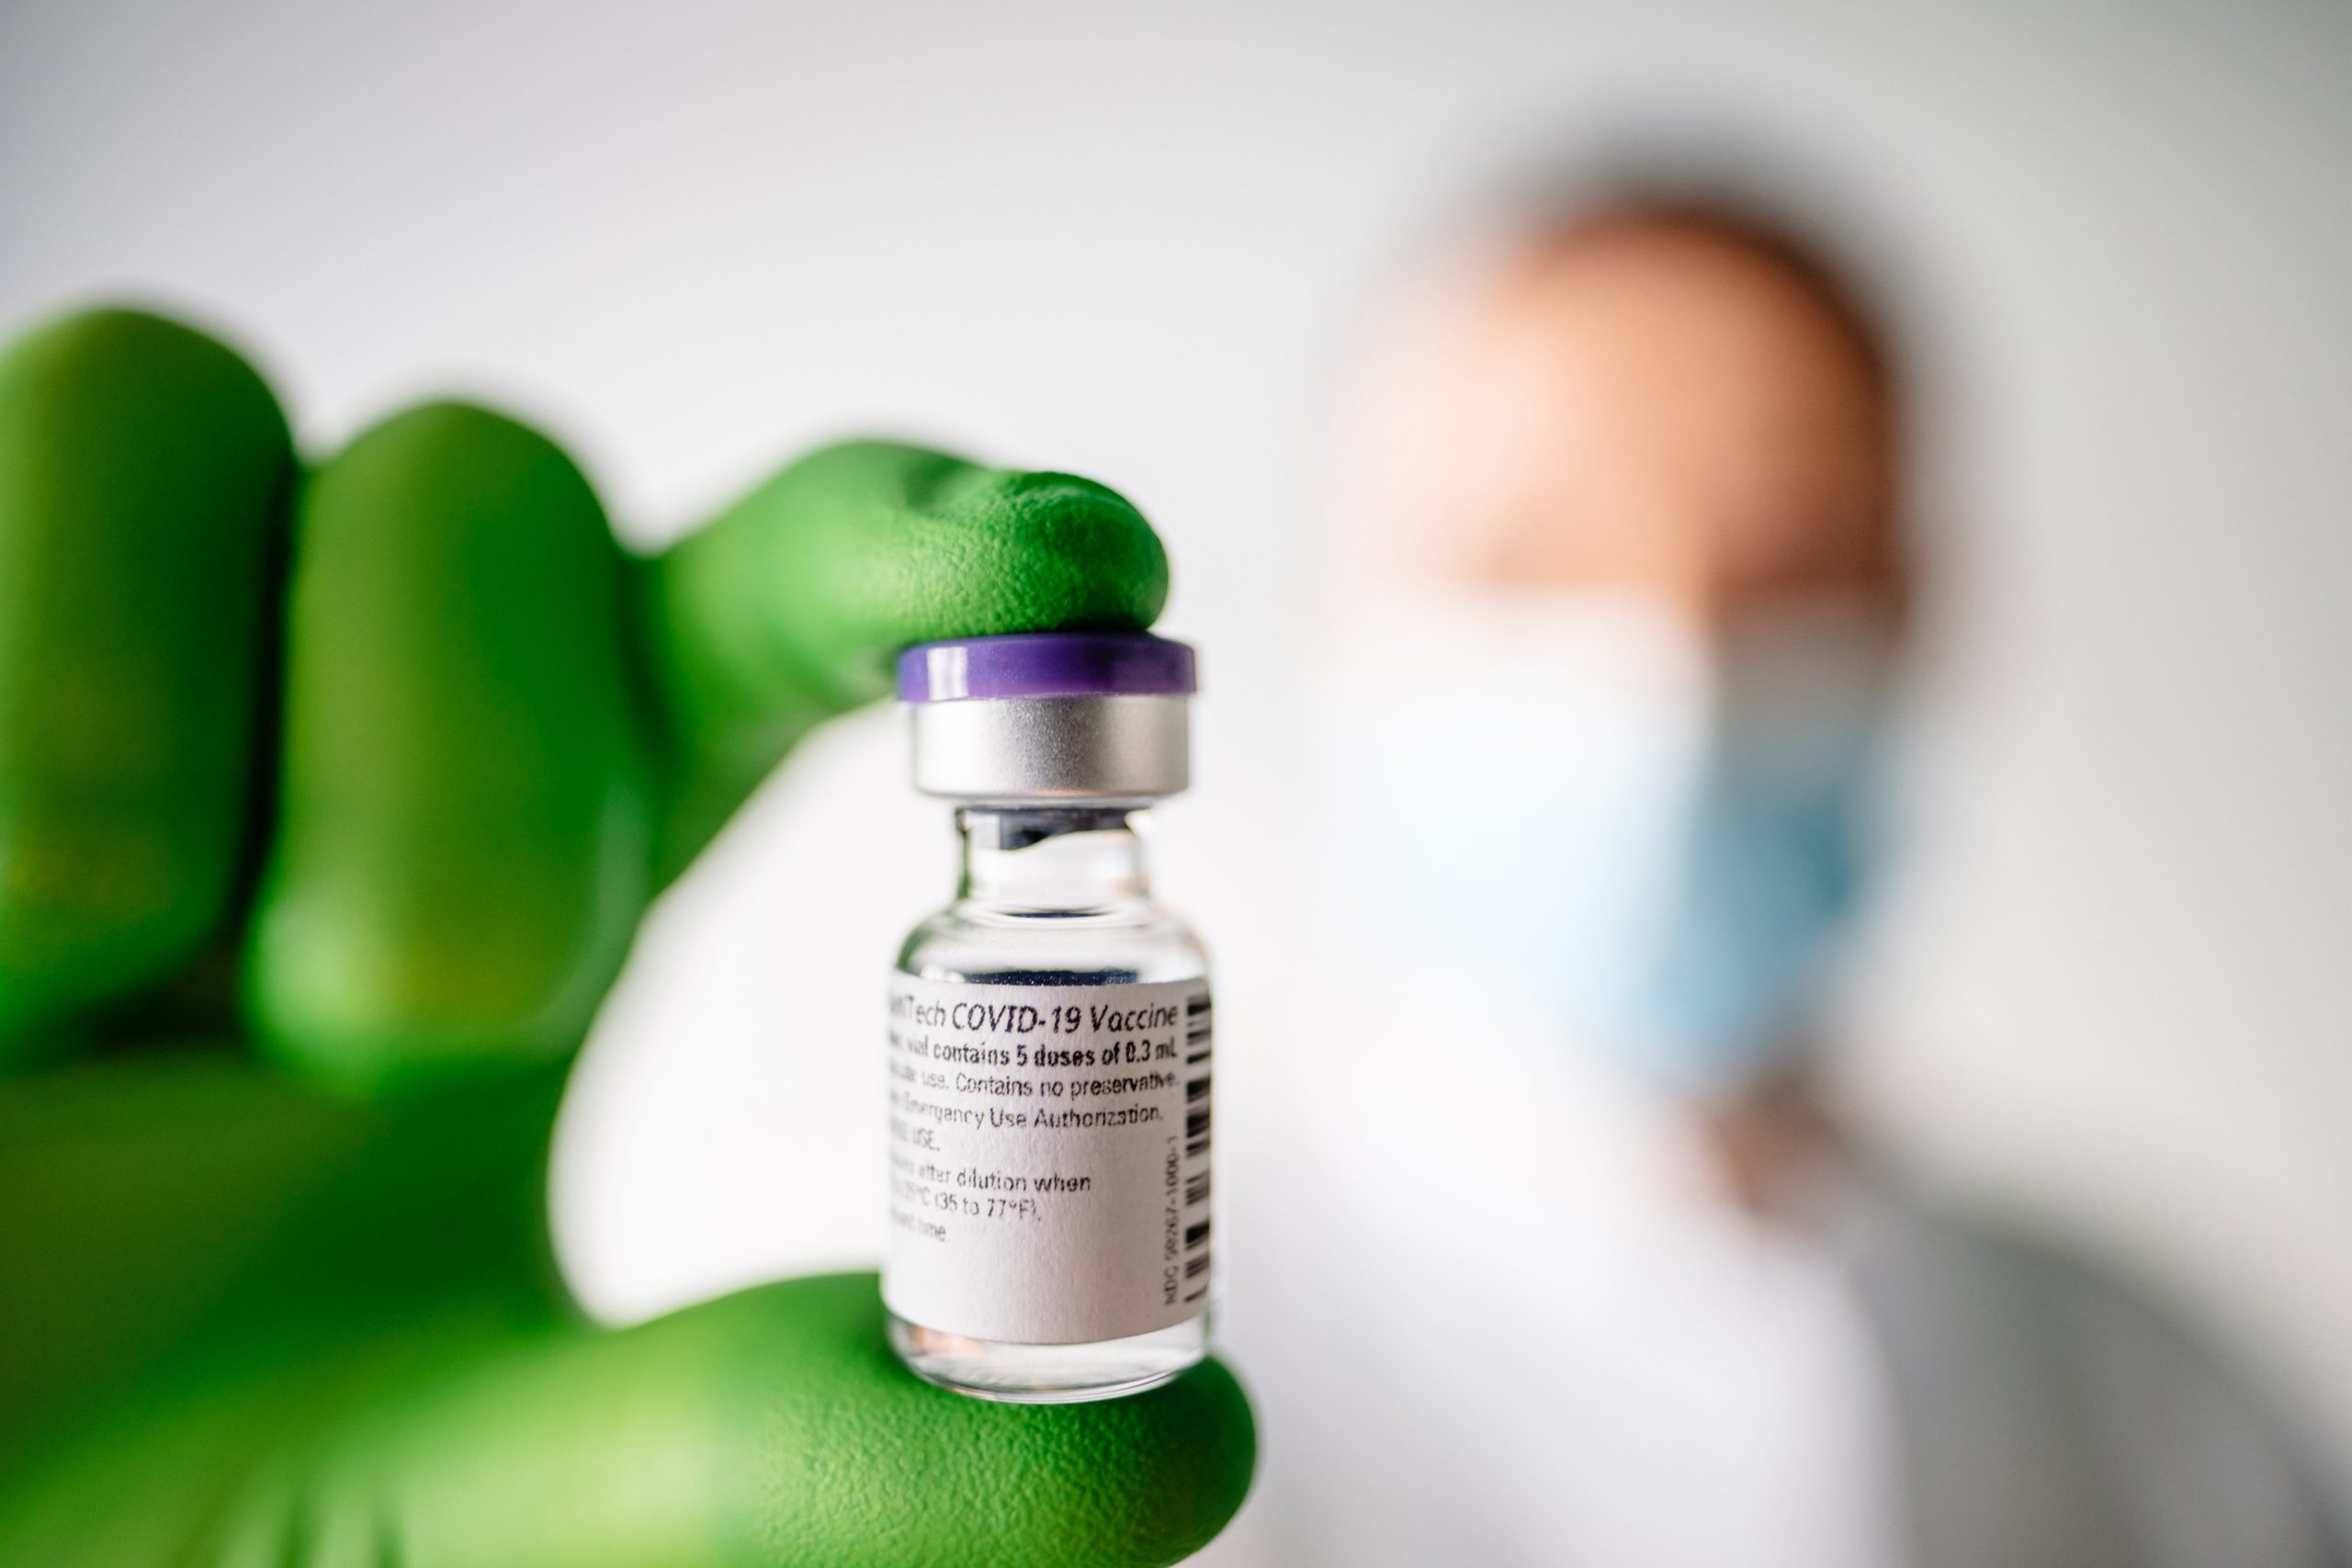 COVID-19 vaccine shipments begin in historic US effort